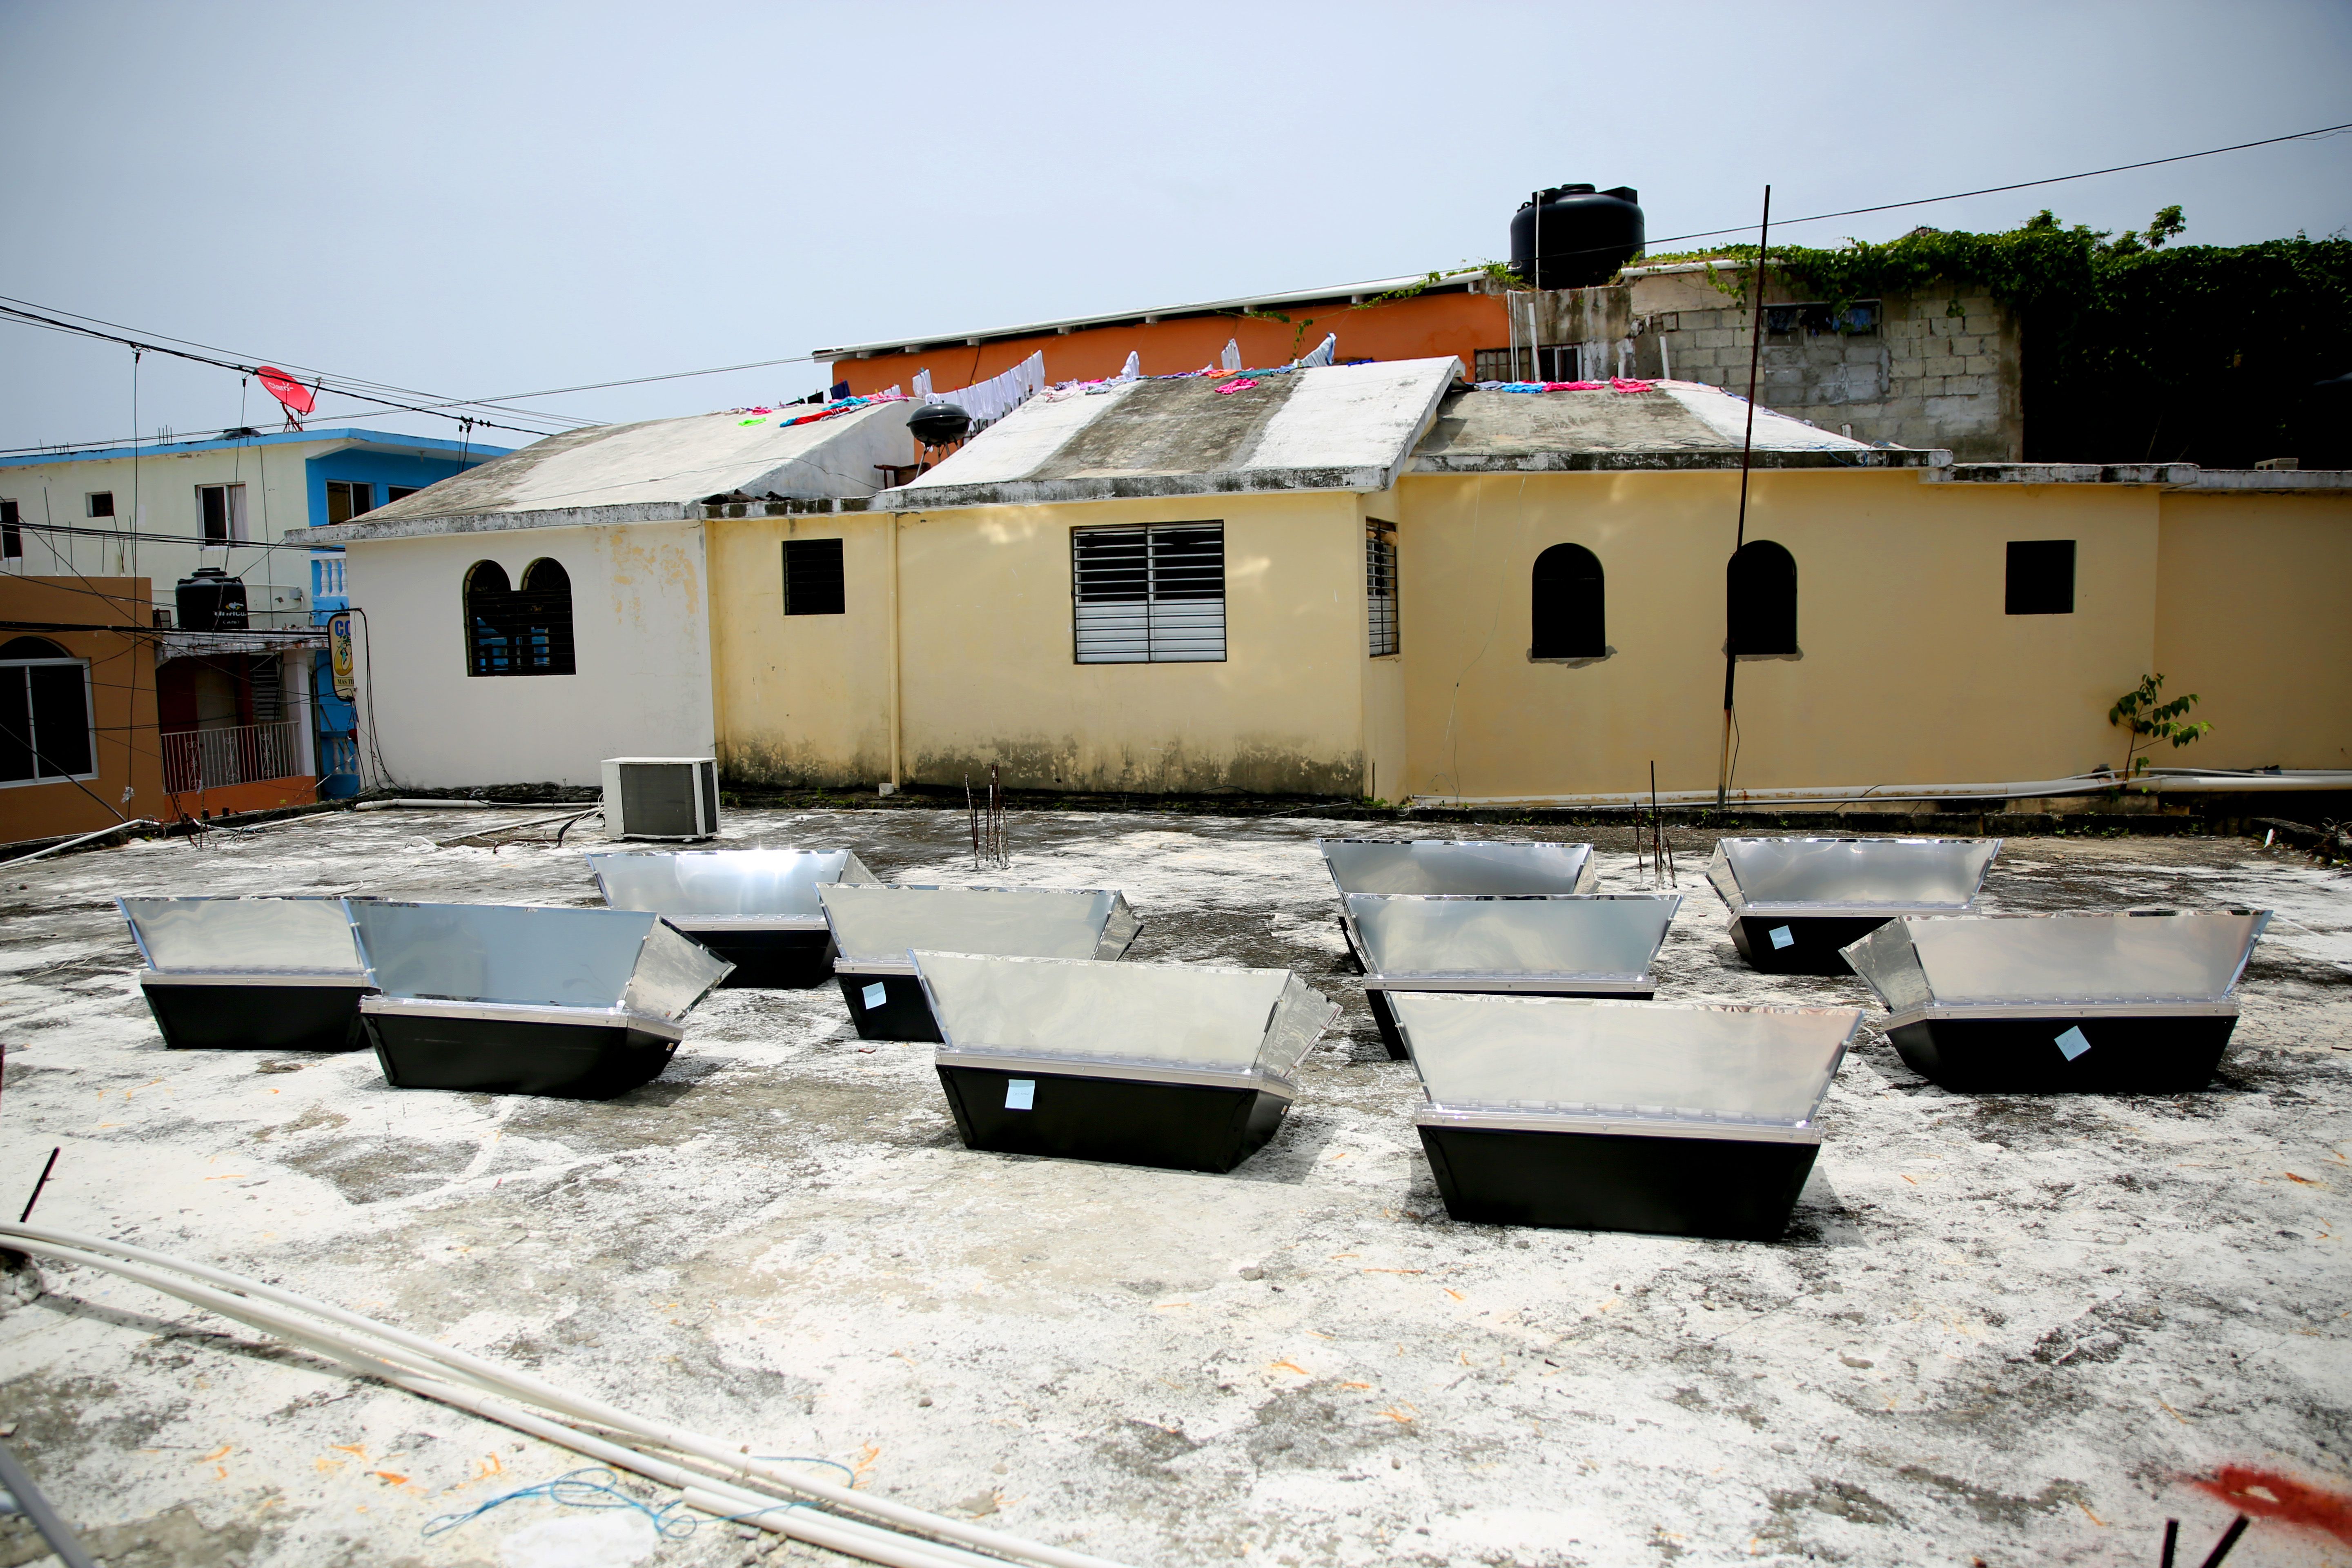 Solar ovens cook atop a Sosua rooftop